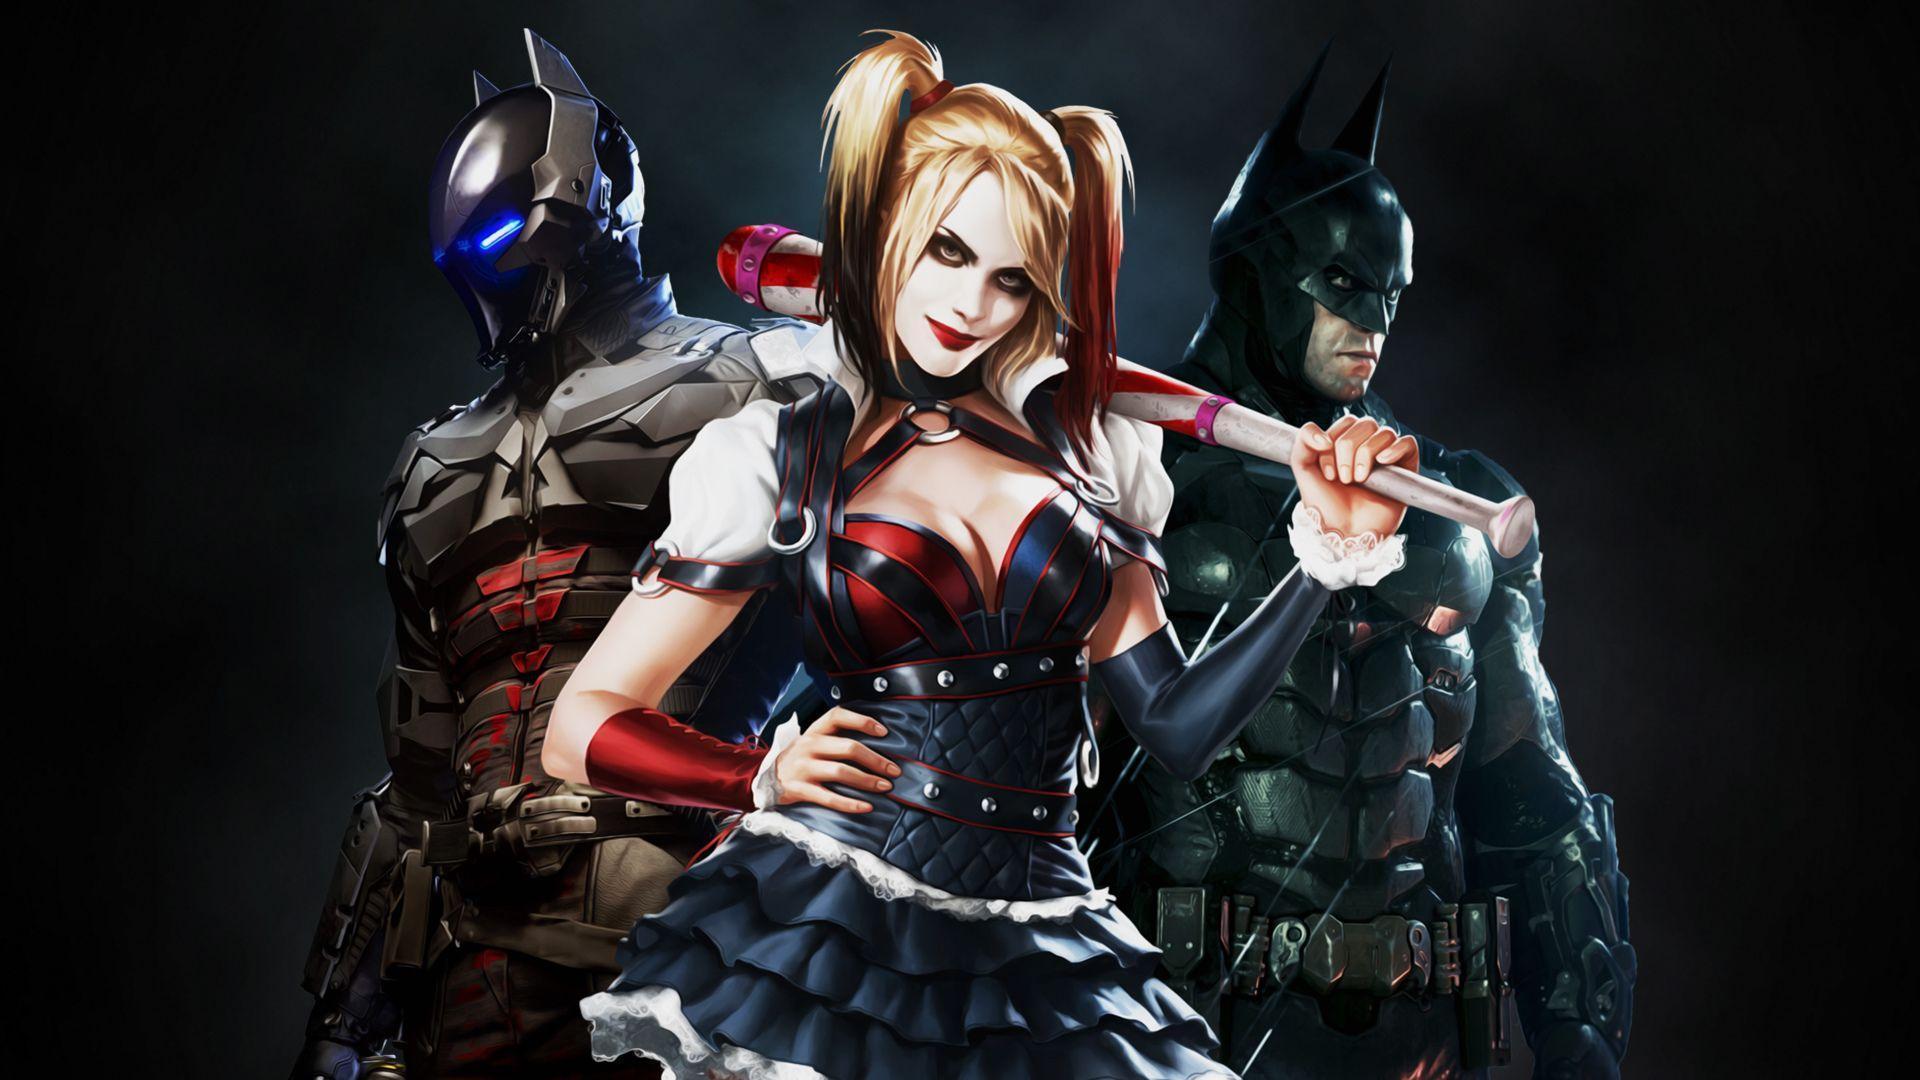 Batman: Arkham Knight HD Wallpaper. Background